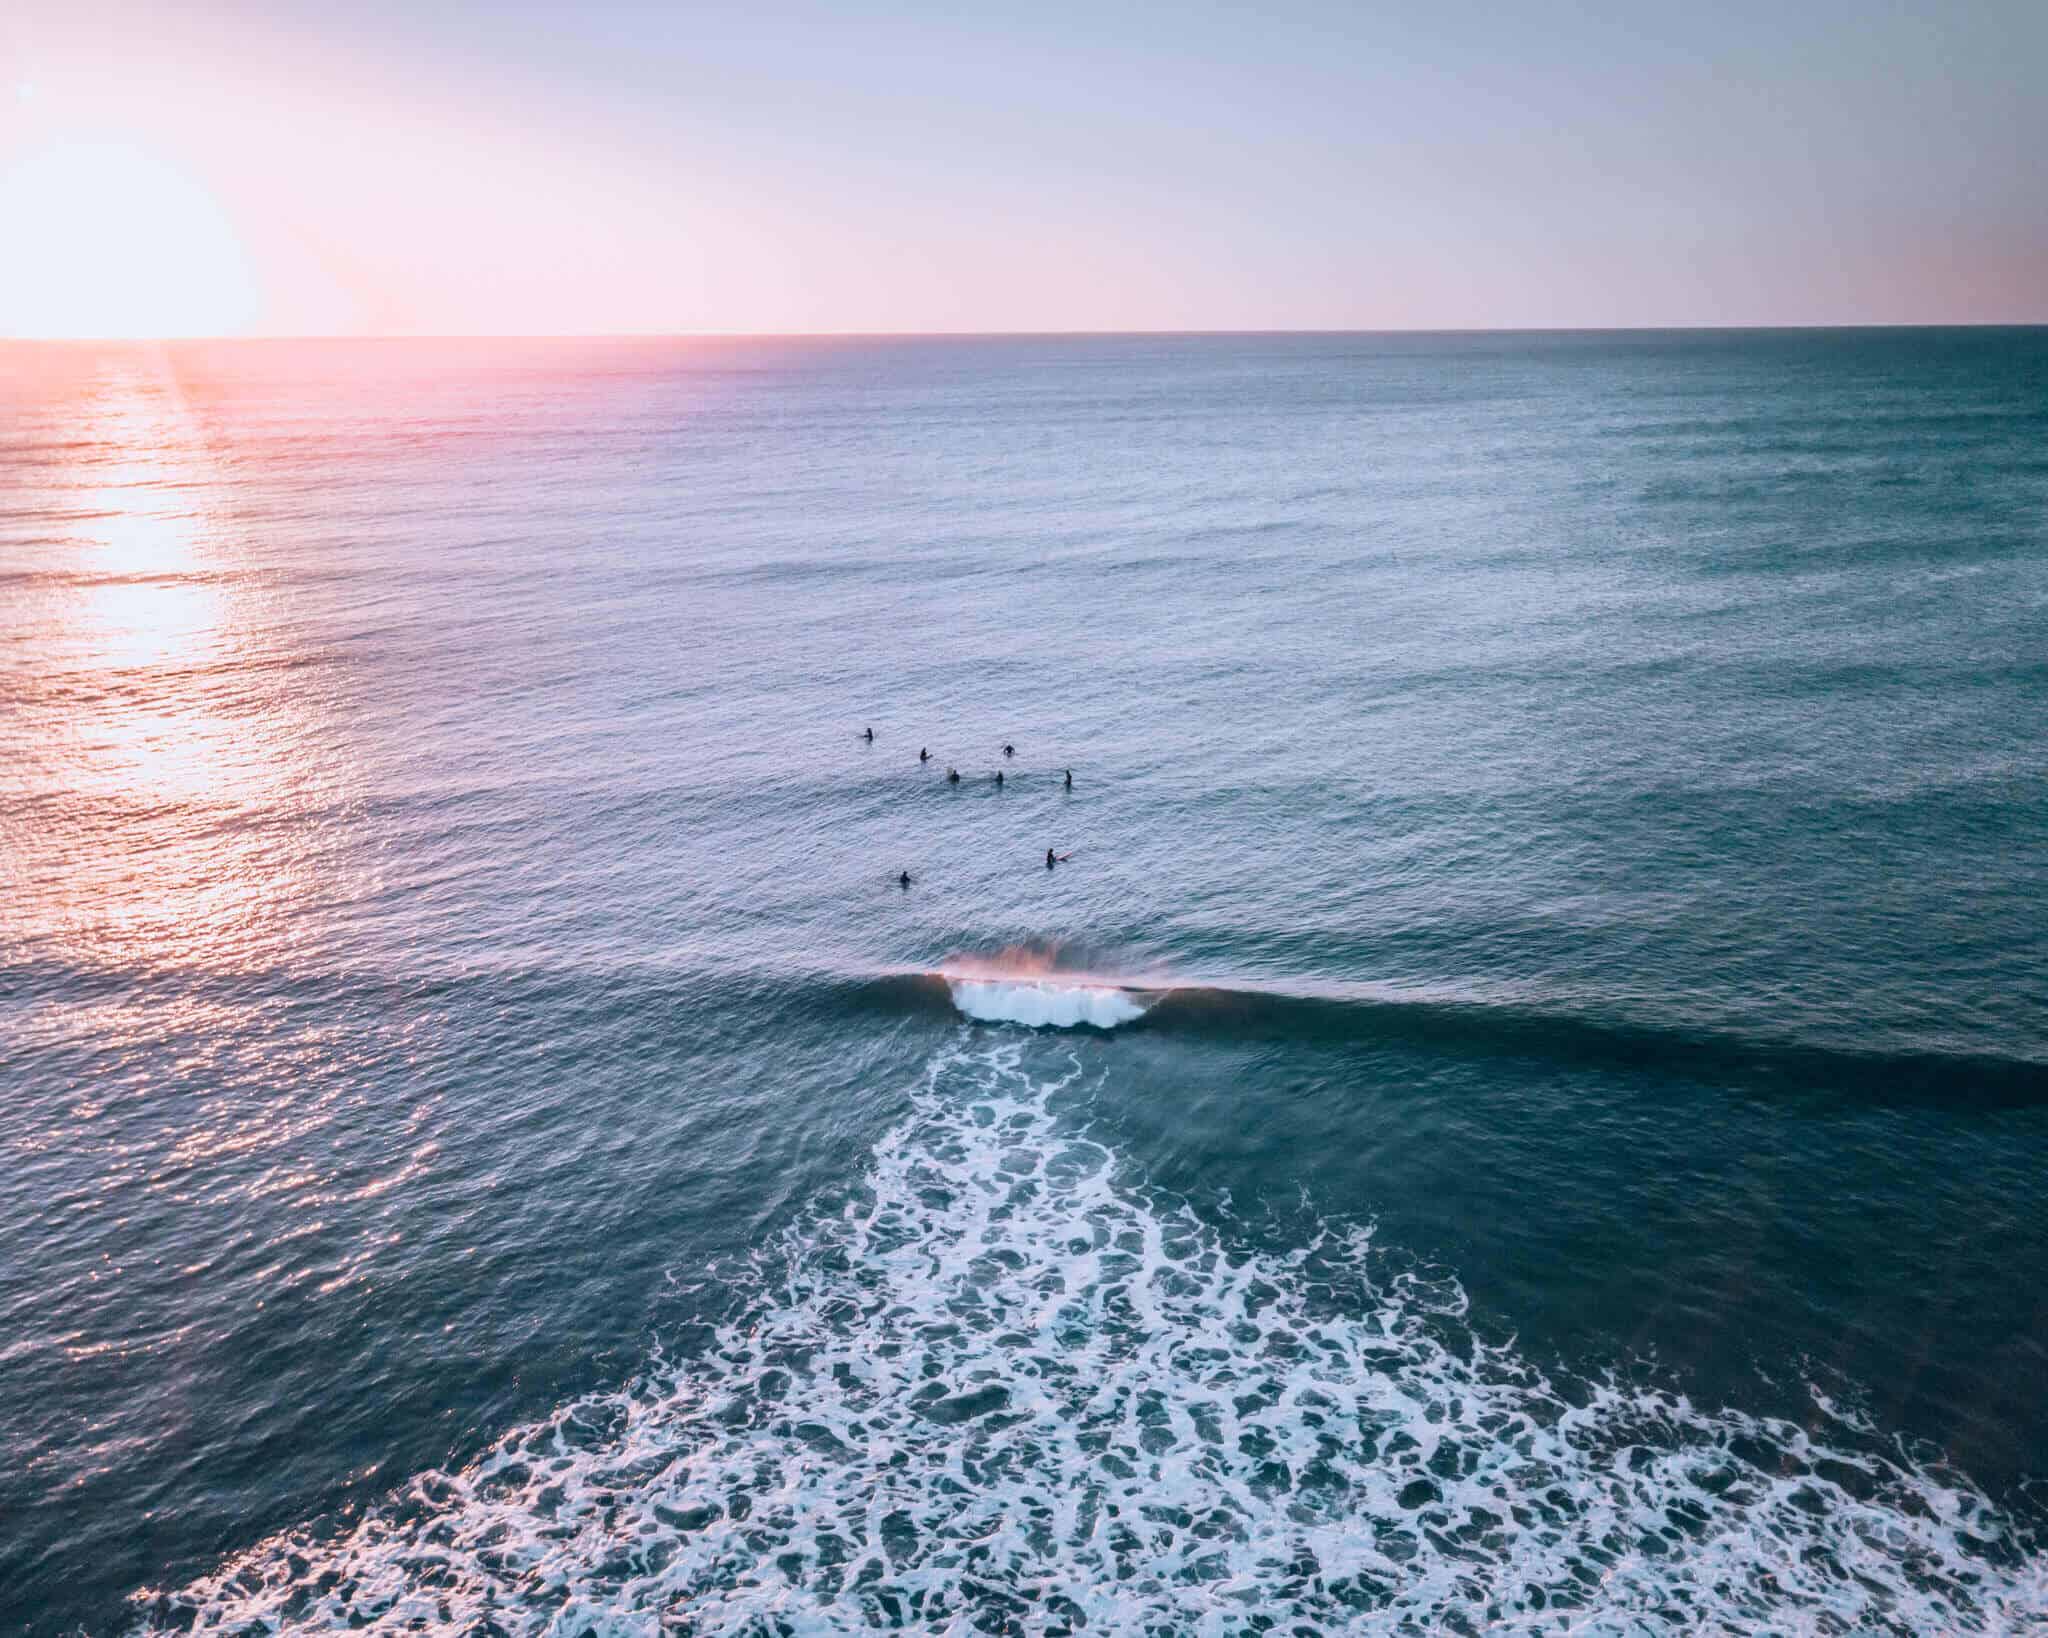 Port Noarlunga surfing at sunset